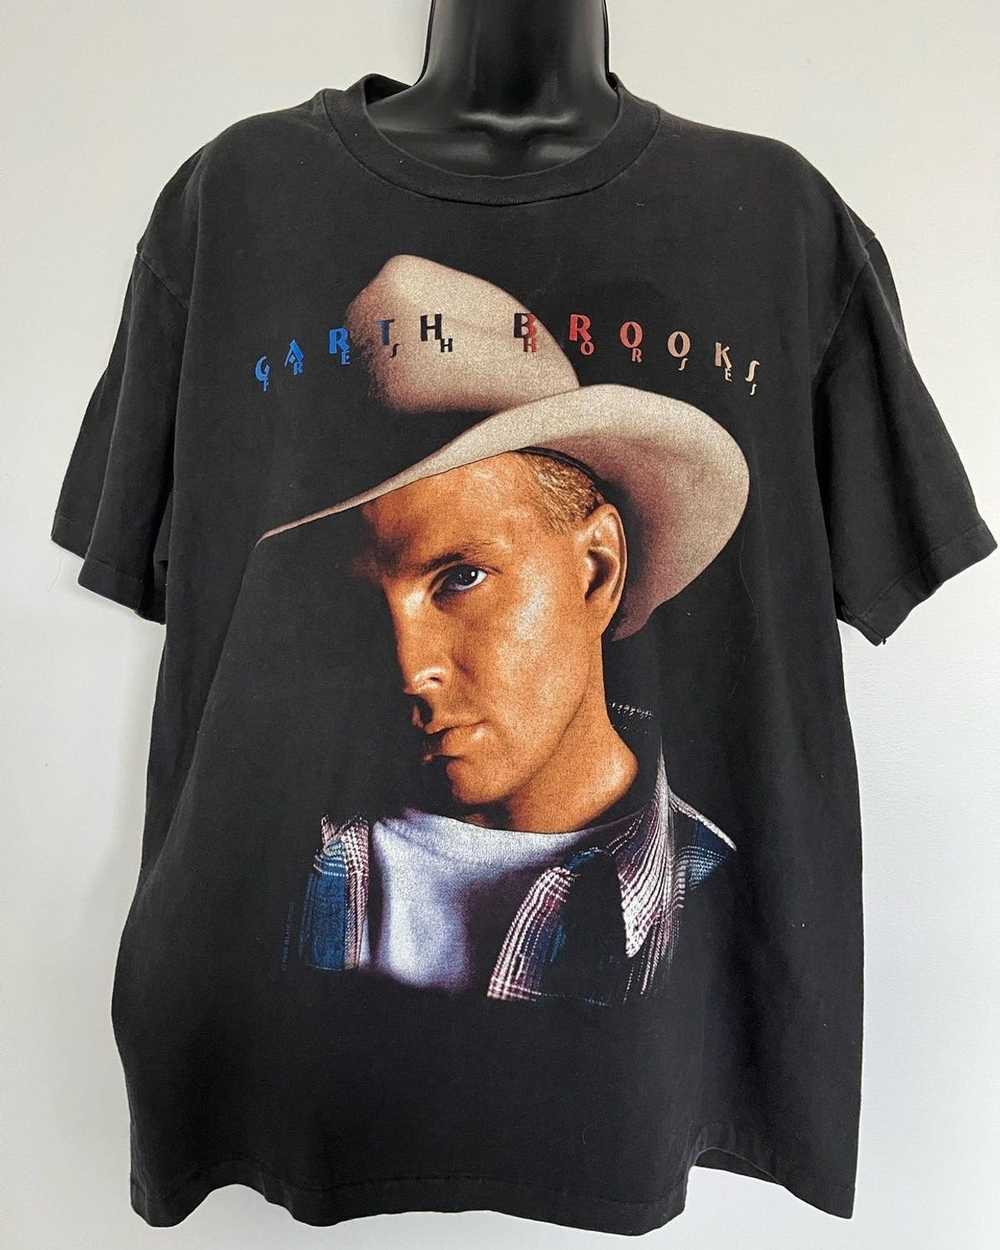 Vintage Vintage Garth Brooks T-shirt - image 1